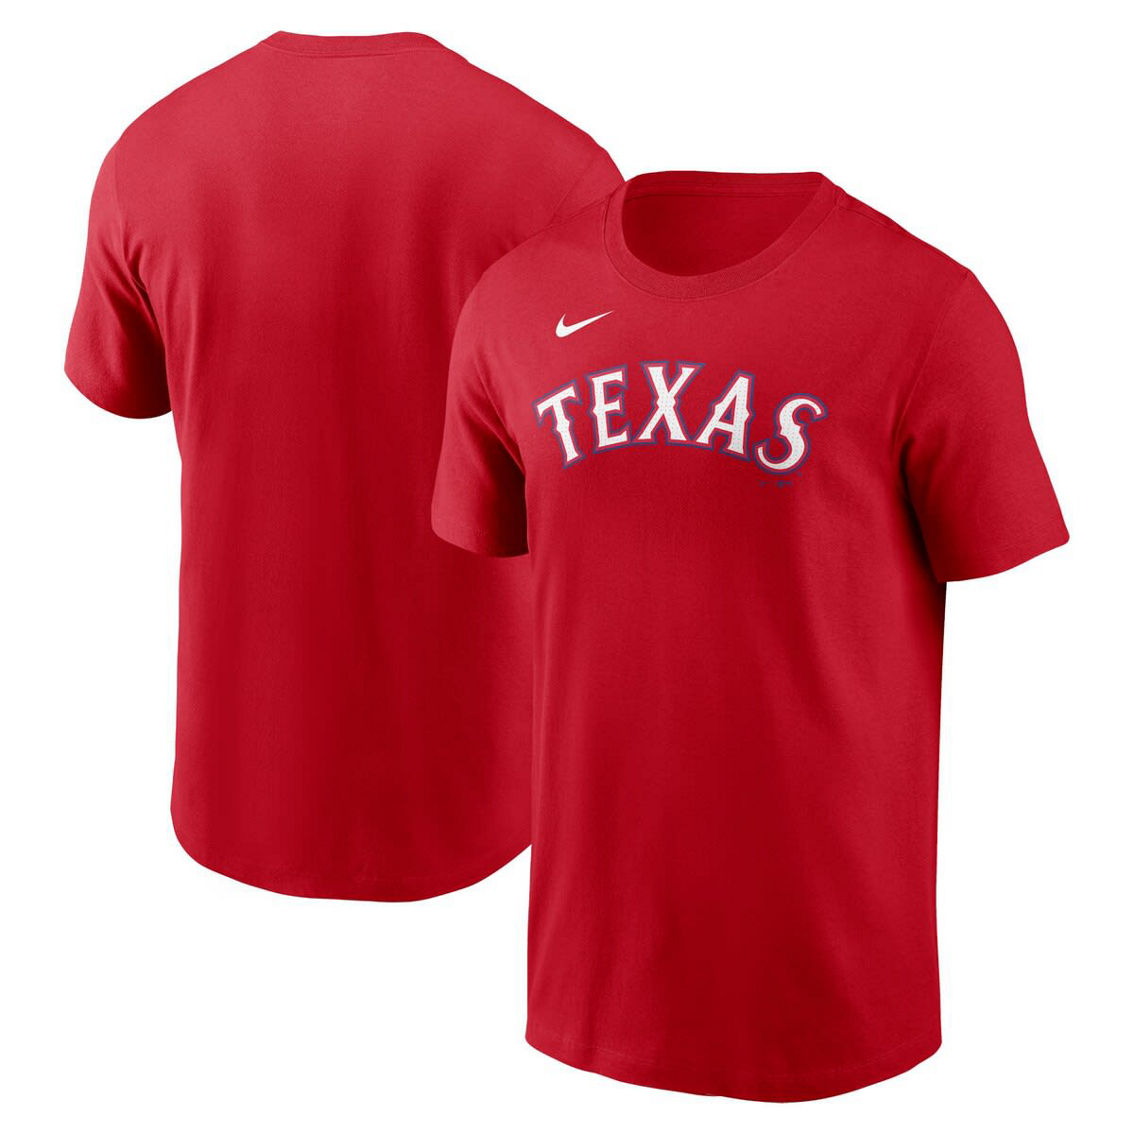 Nike Men's Red Texas Rangers Fuse Wordmark T-Shirt - Image 2 of 4